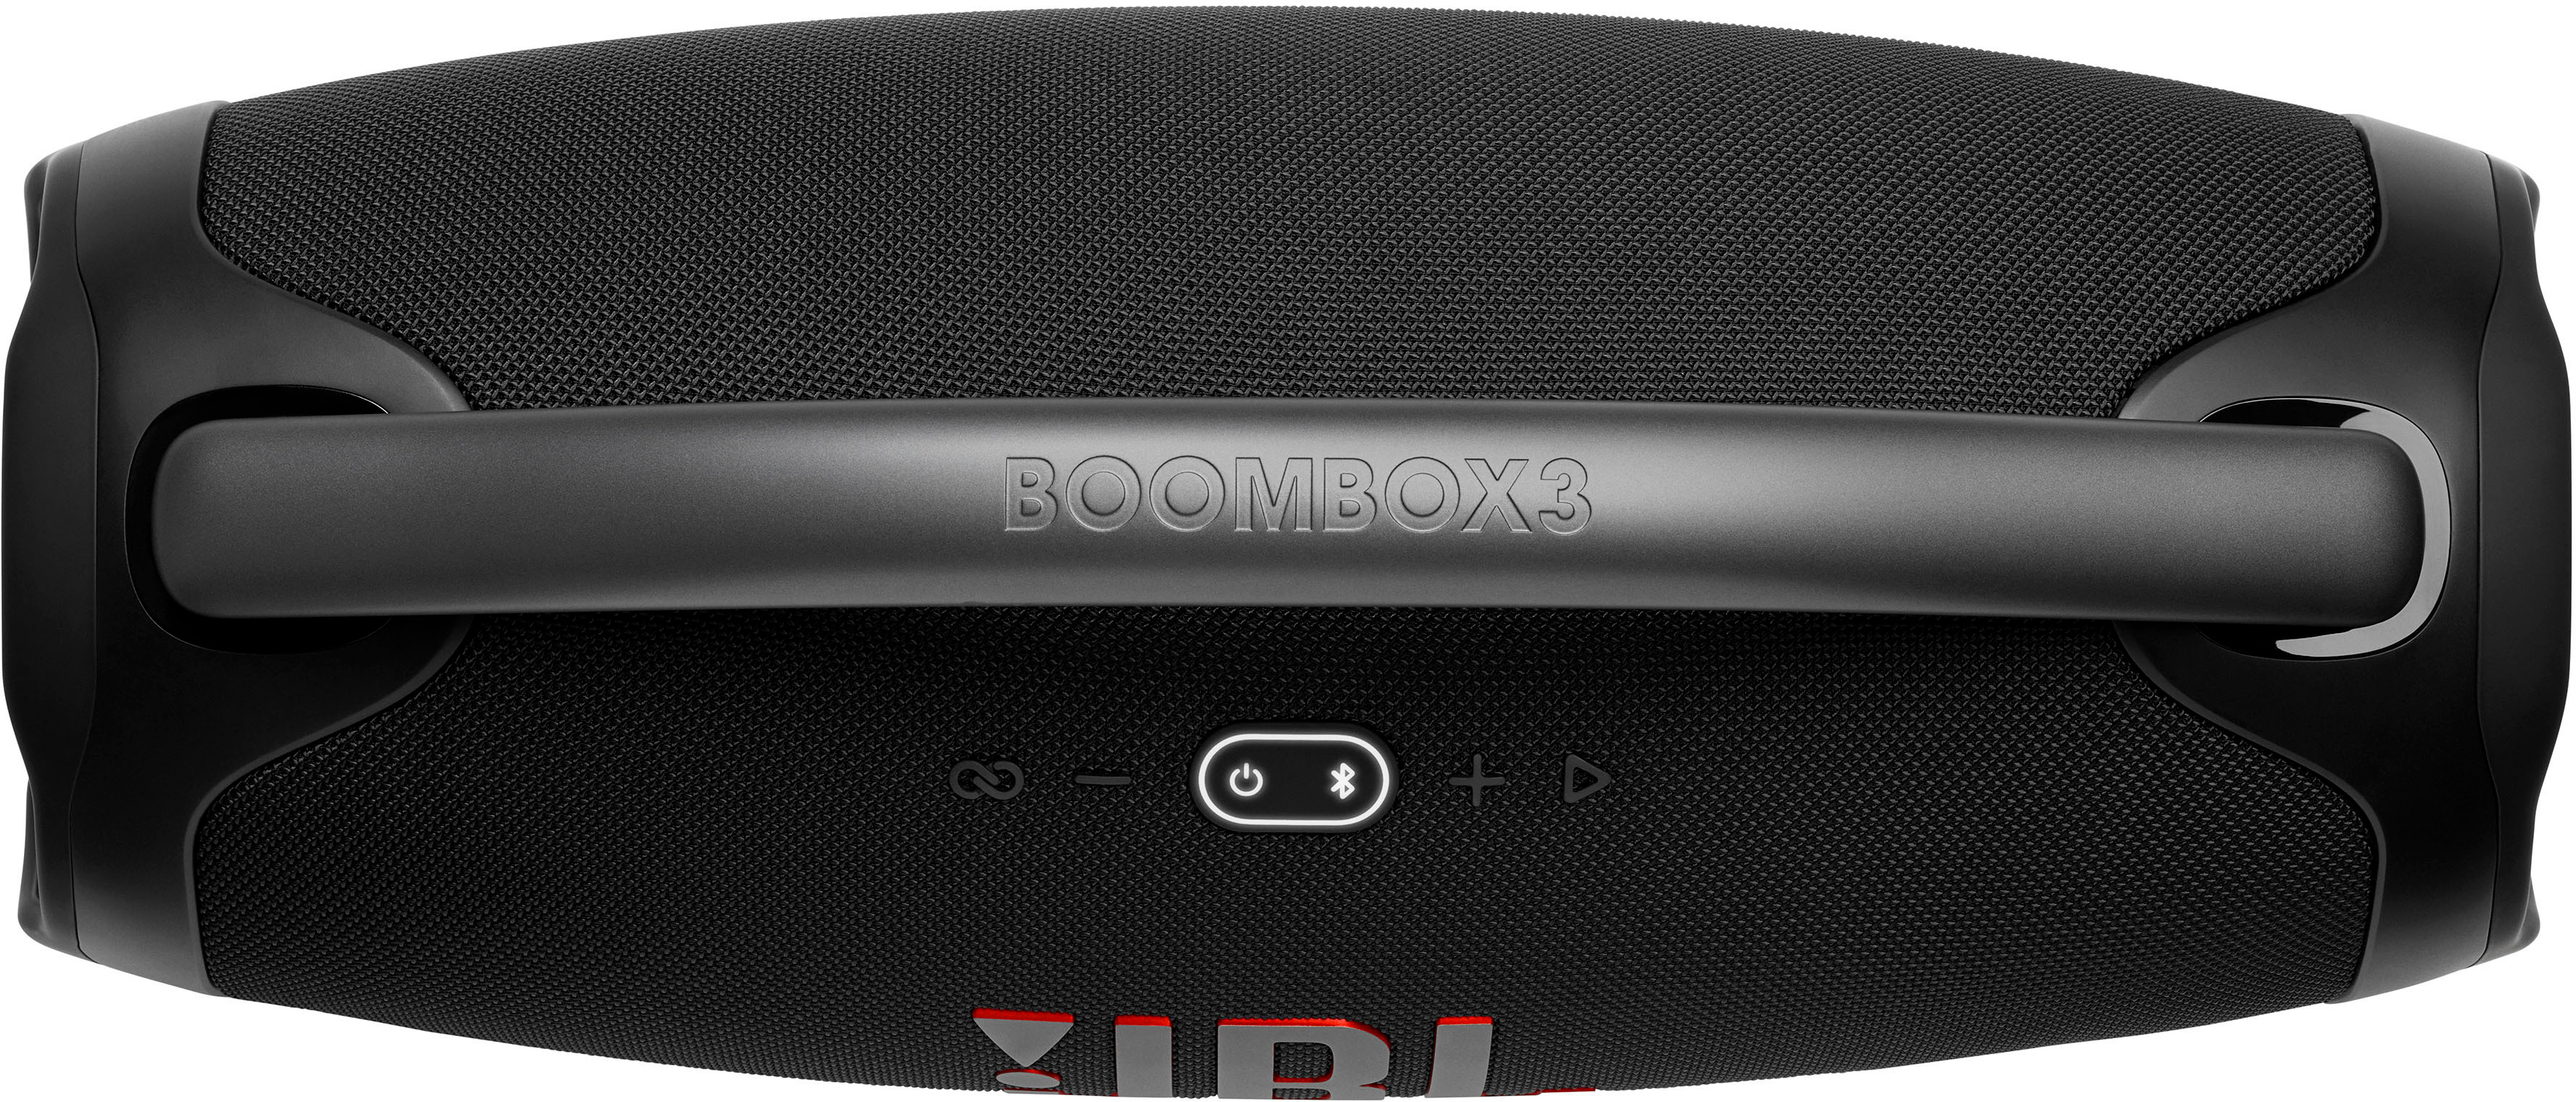 Boombox 3 Portable Bluetooth Ipx7 Waterproof Speaker - Black Jblboombox3blkam